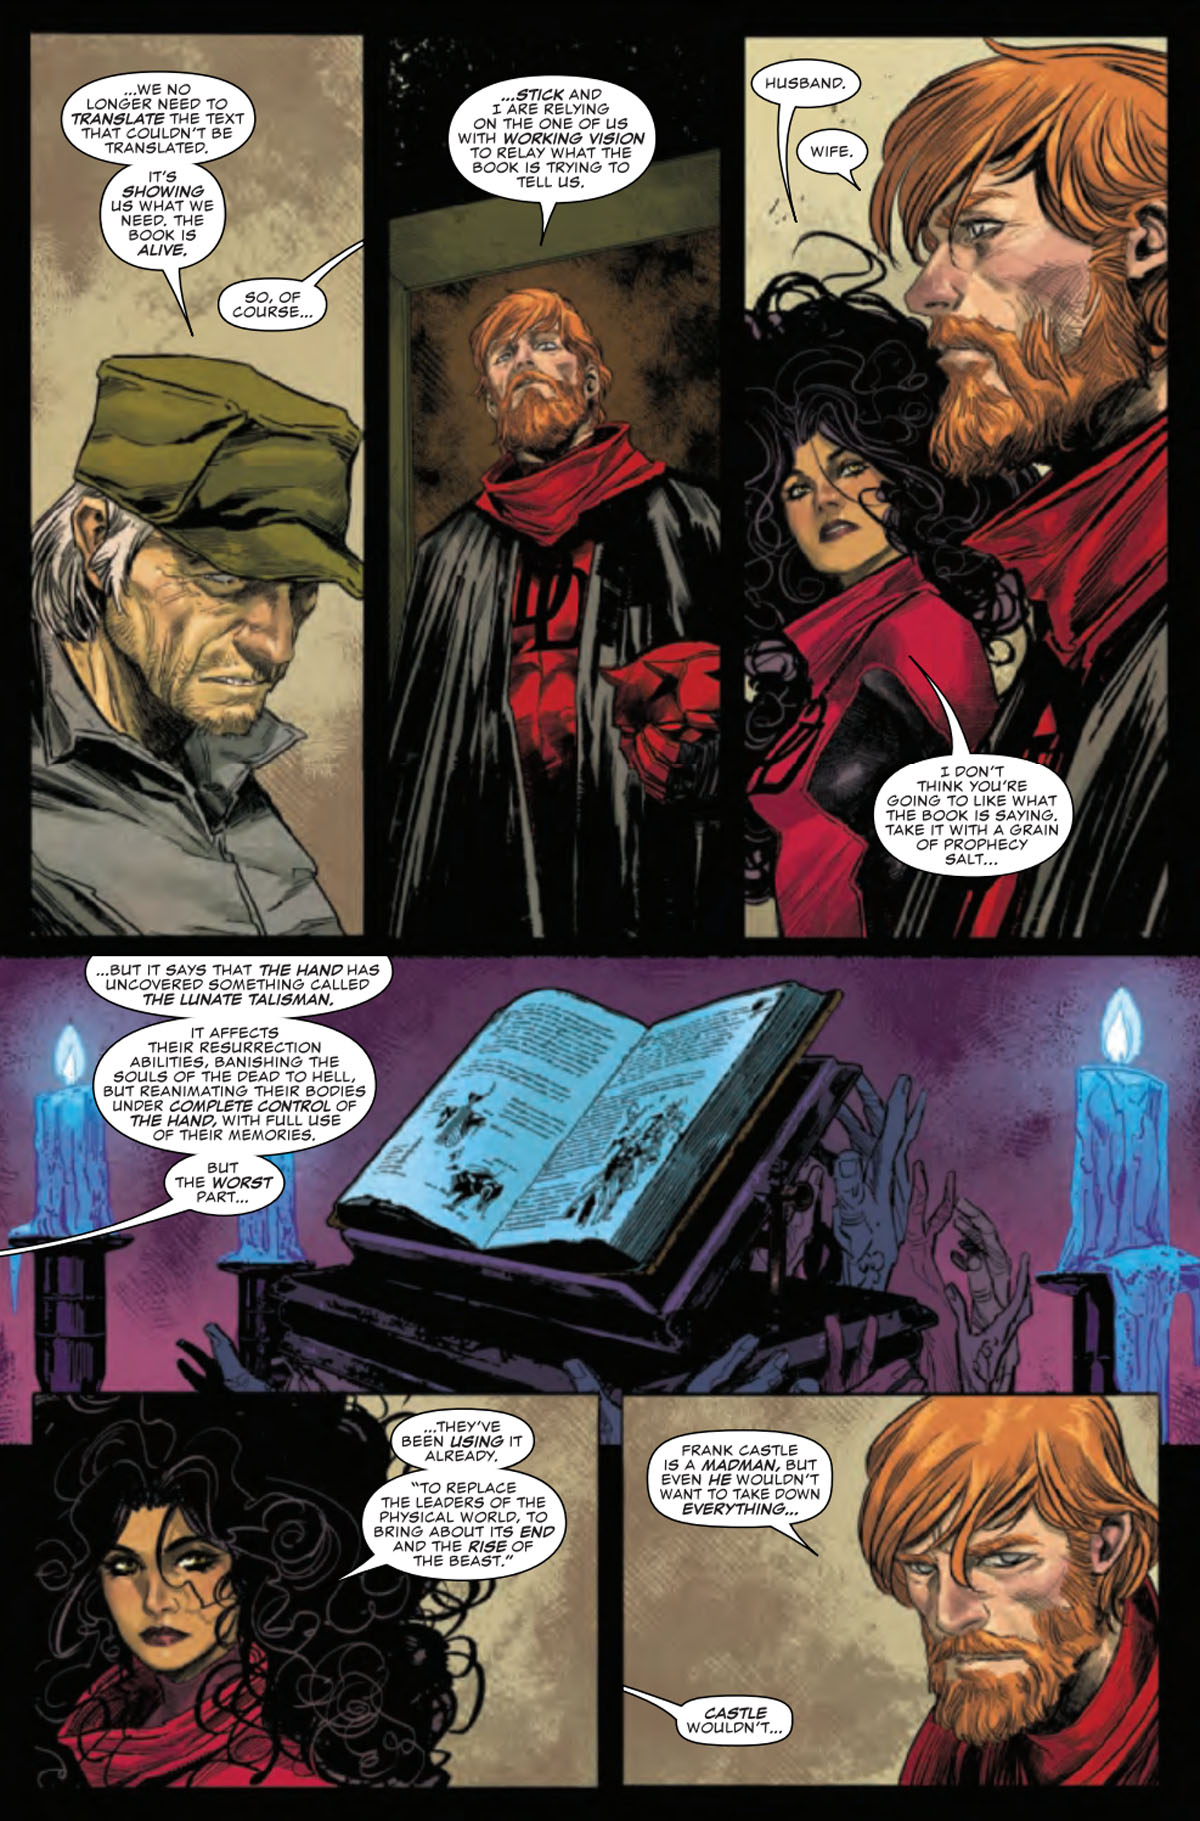 Daredevil #5 page 3